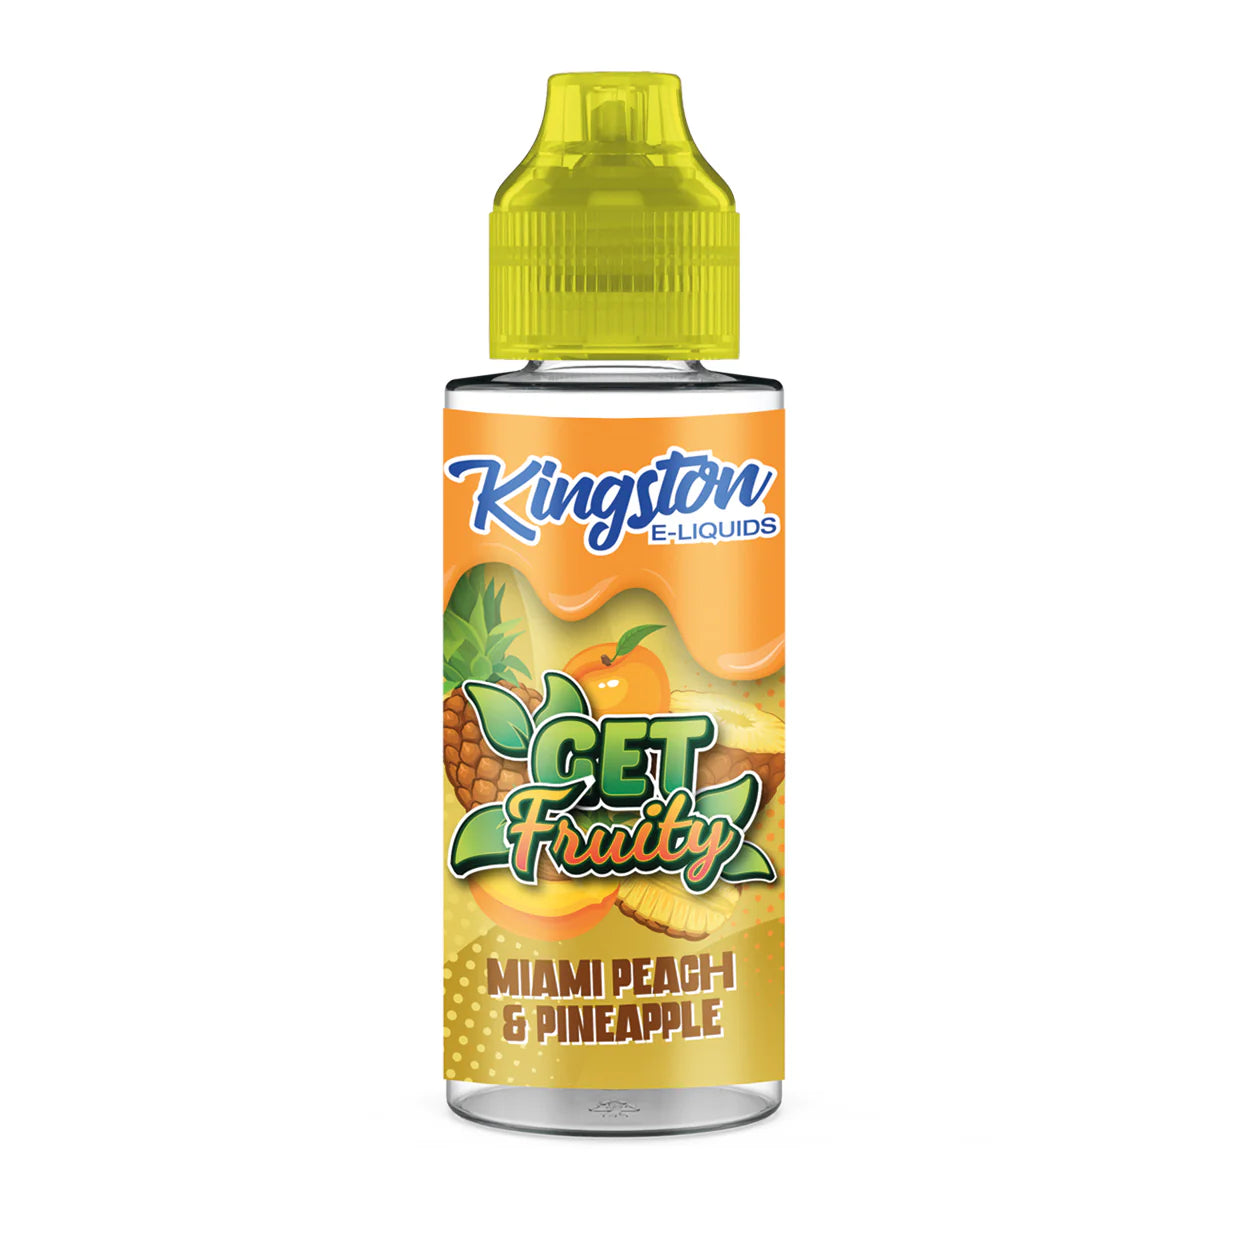 Kingston - Get Fruity - Miami Peach Pineapple - 100ml